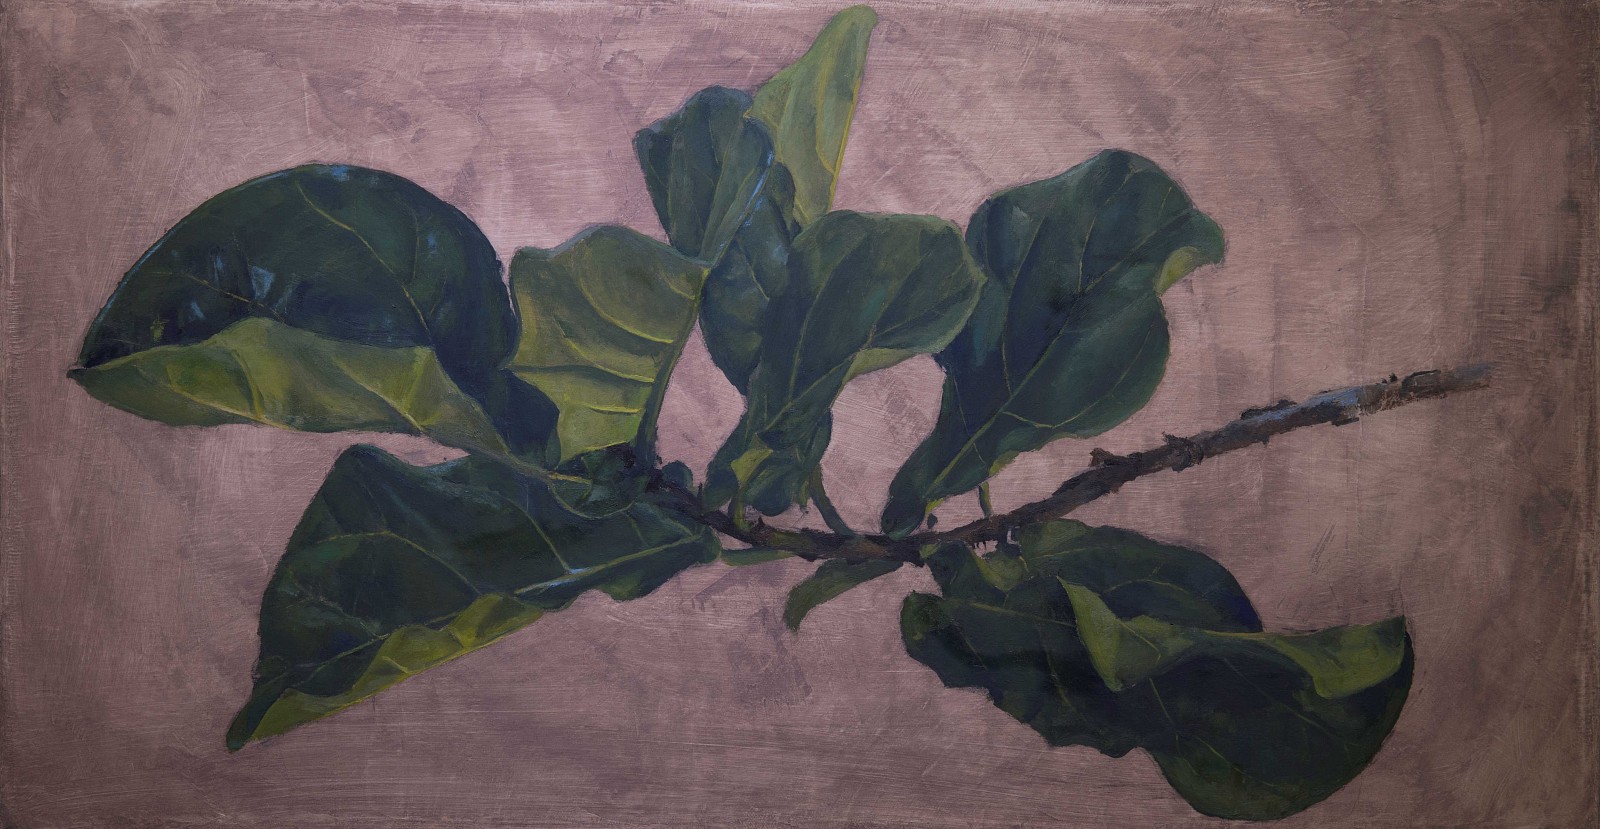 Mark Glezin, Untitled
2022, Oil on canvas